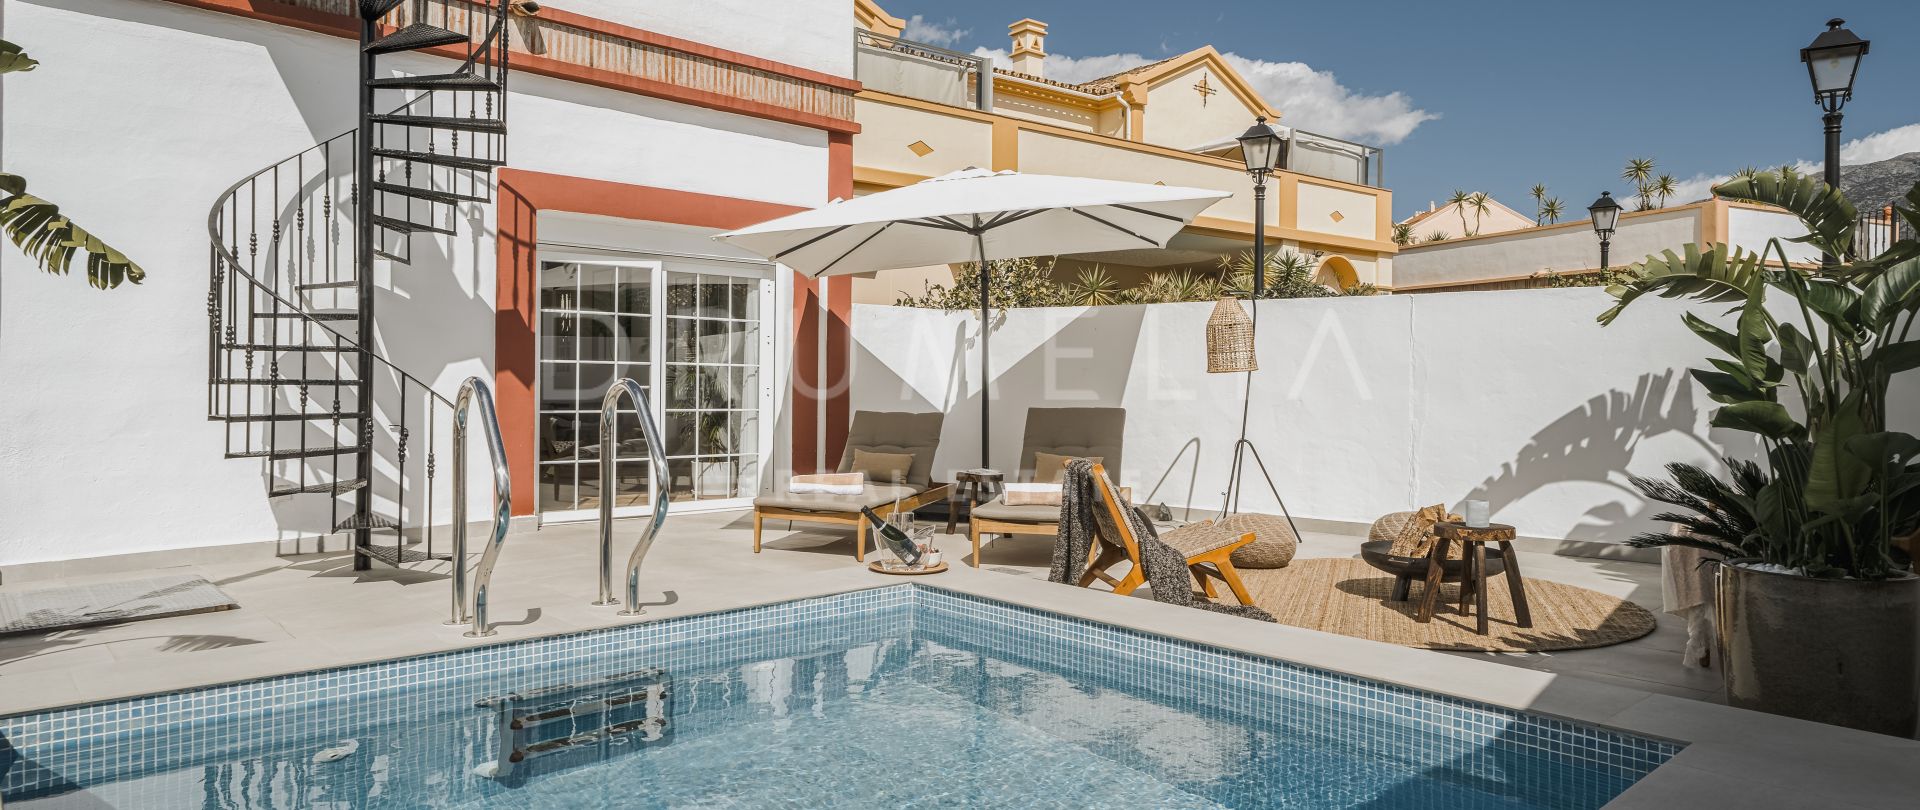 Superb luxury townhouse with Scandinavian interior in Aldea Dorada, Nueva Andalucia, Marbella